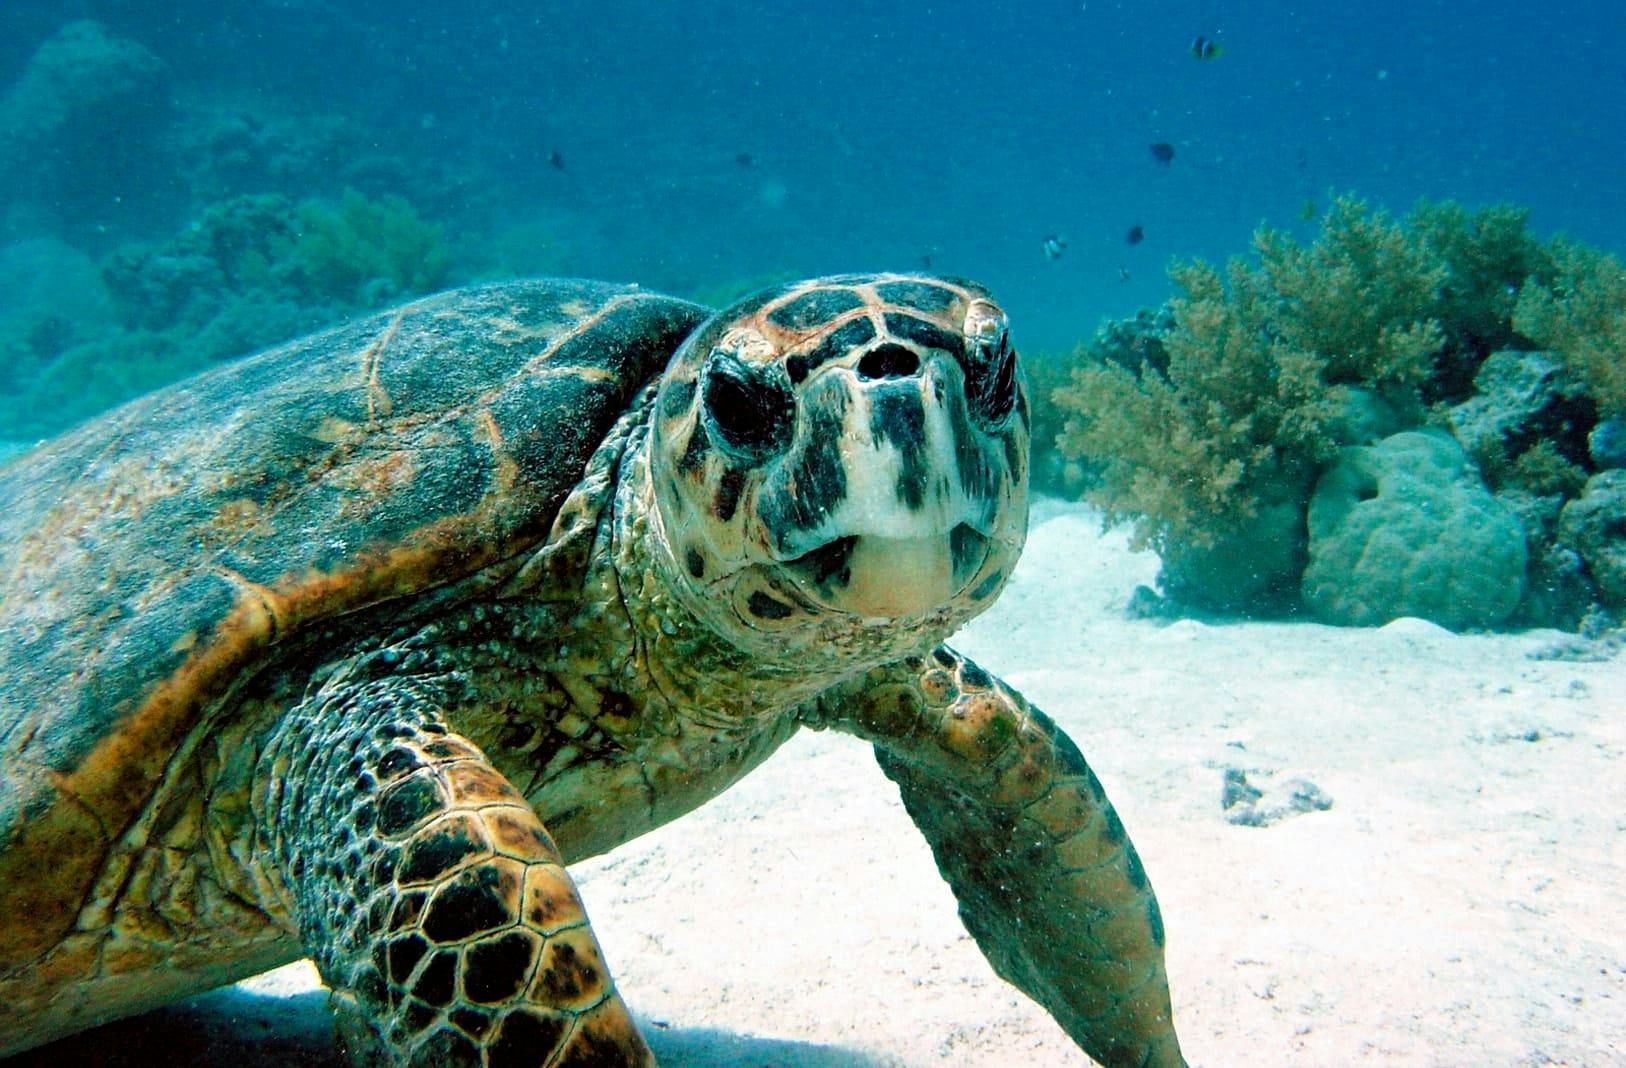 Snorkelling with Turtles and Maya Village Visit in Riviera Maya